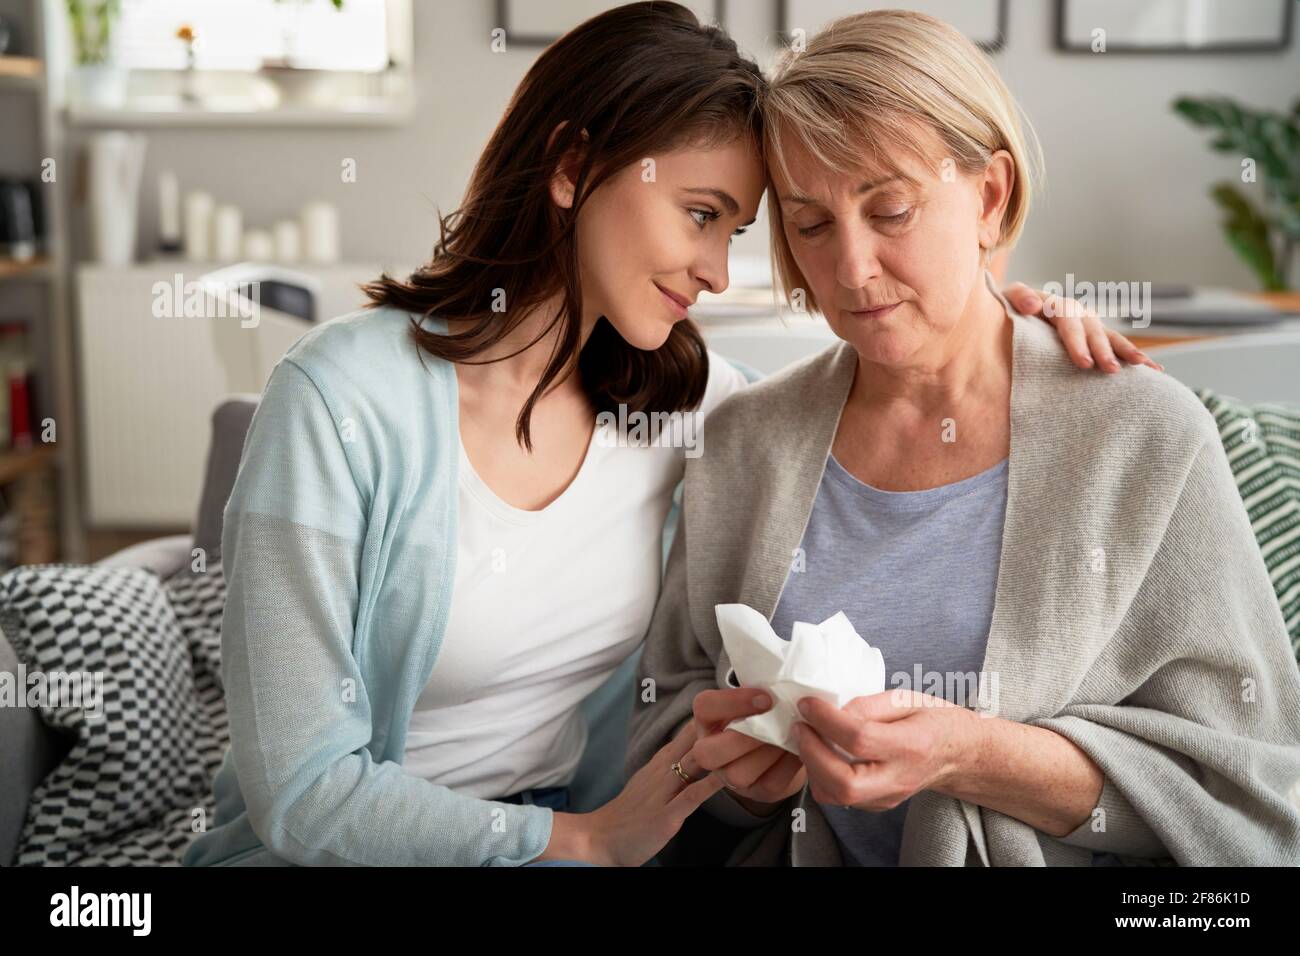 Woman comforting upset senior woman Stock Photo